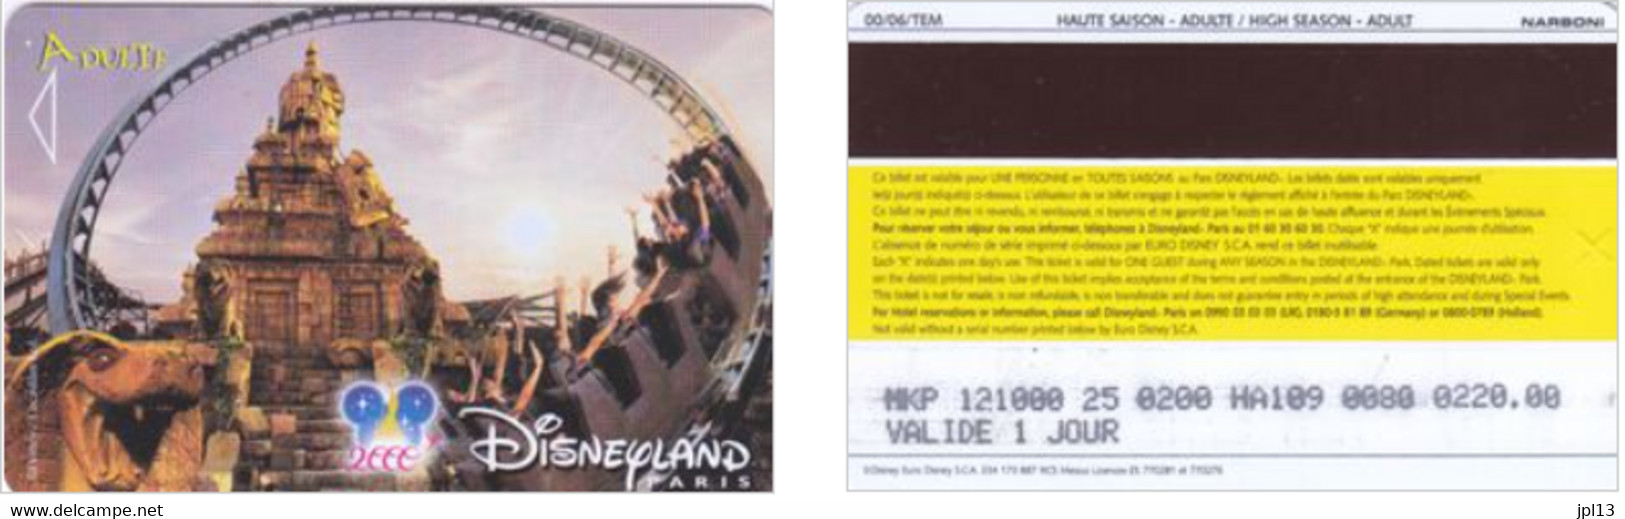 Passeport Disney - France - Disneyland Paris - 2000 - Passeports Disney